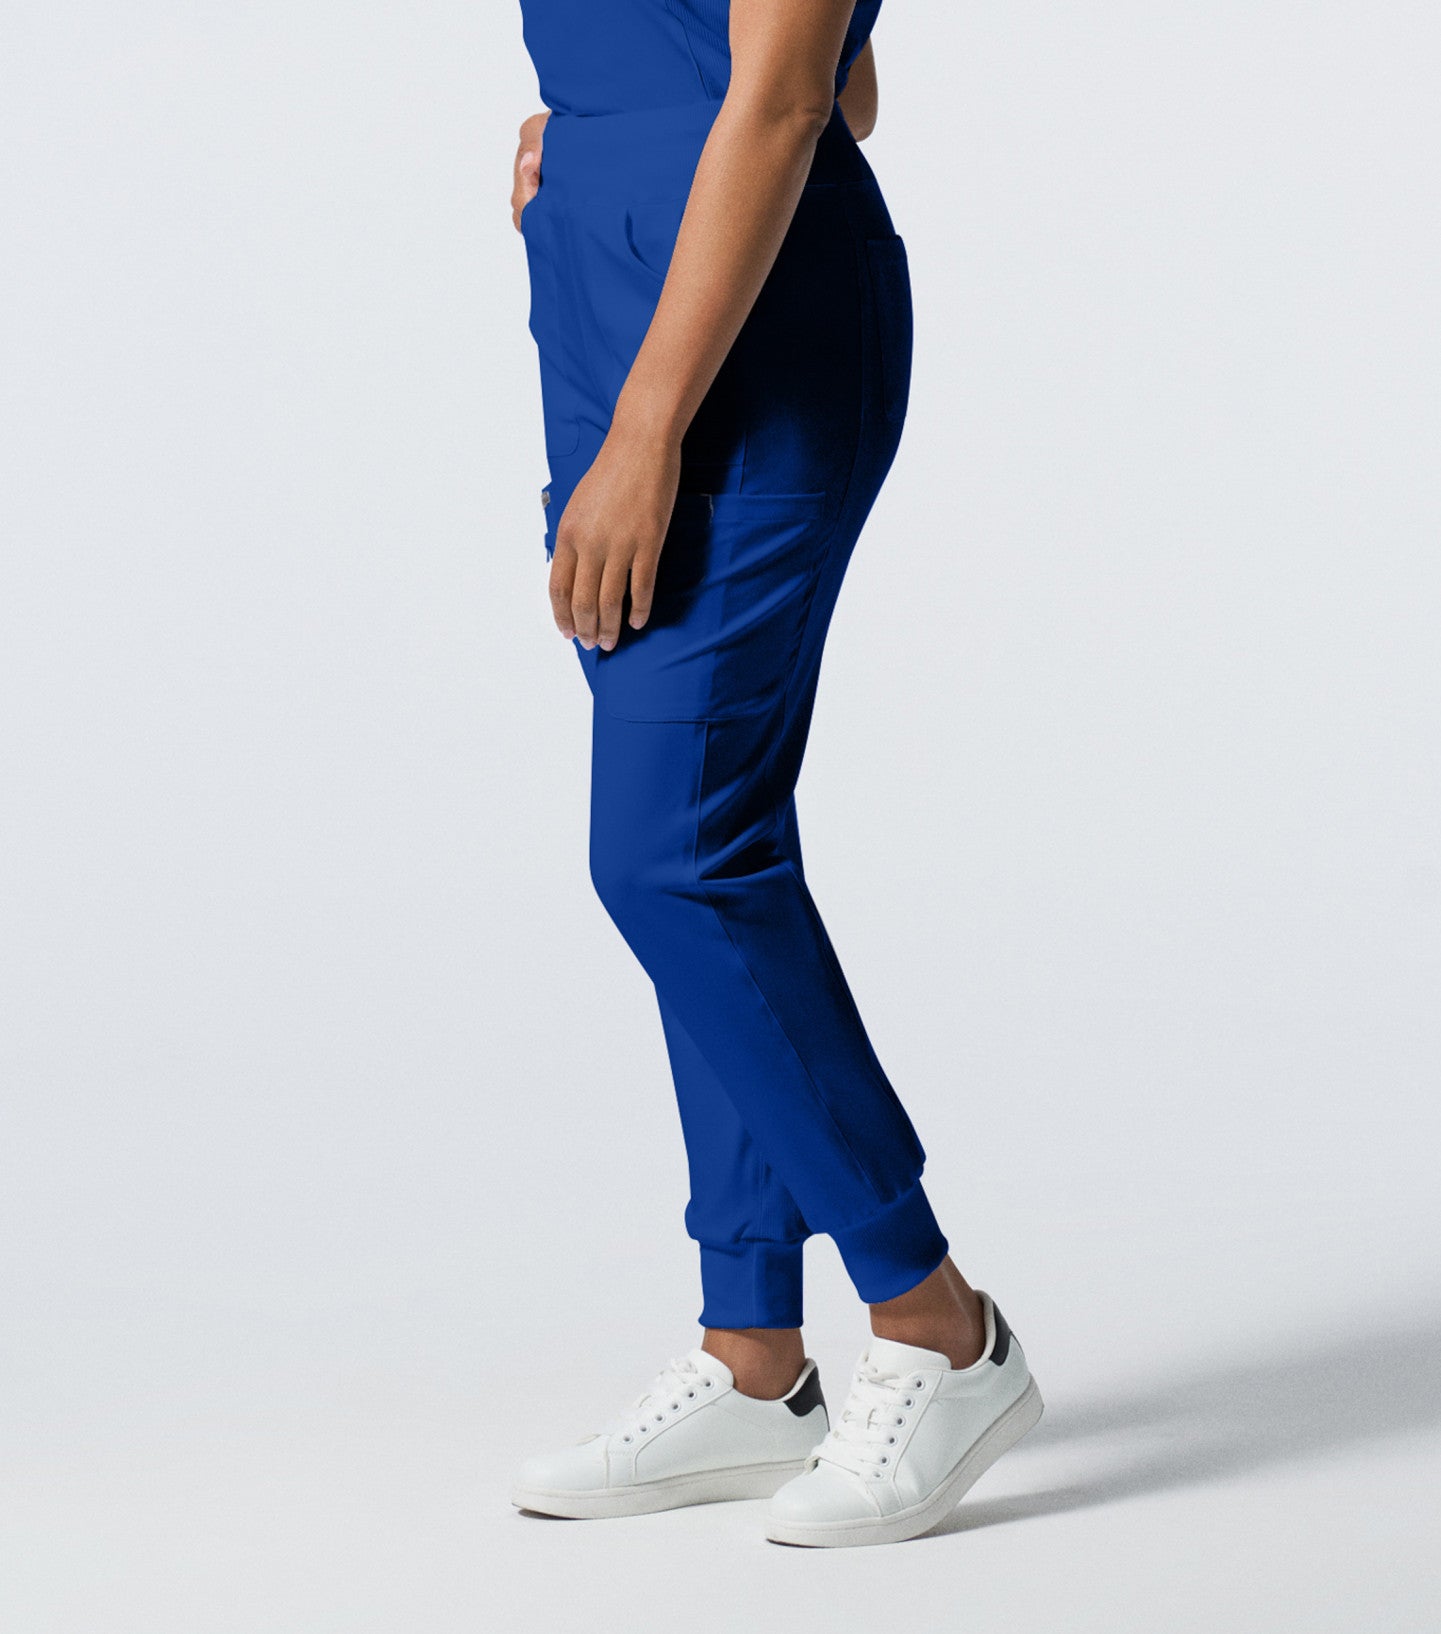 Women's Landau Forward Jogger Scrub Pants in Regular Length – BodyMoves  Scrubs Boutique